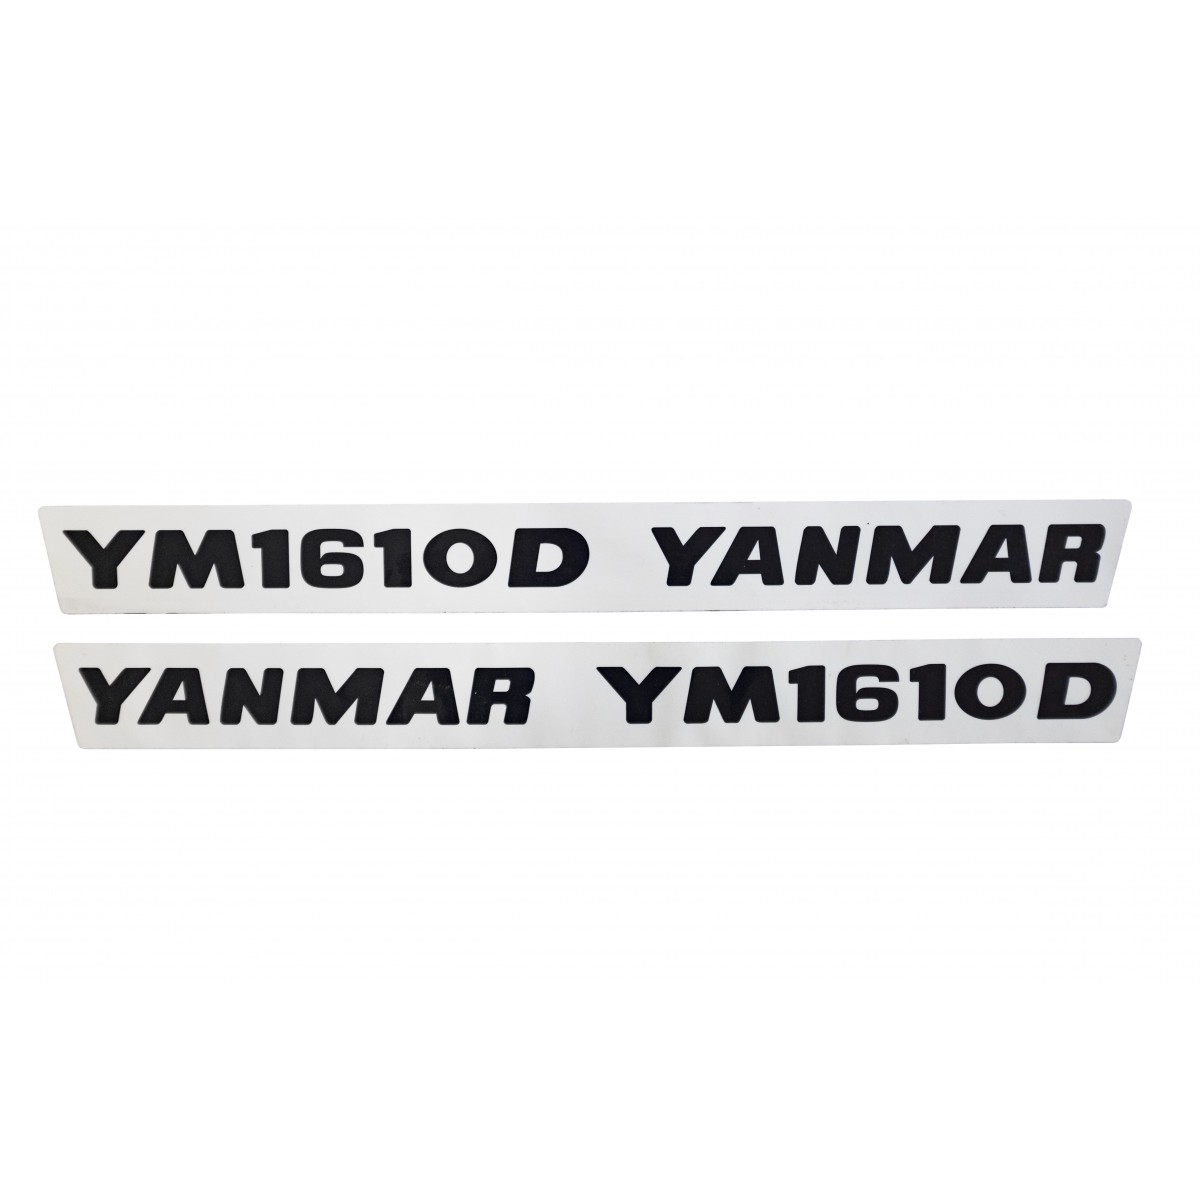 Naklejki ( 2 szt ) Yanmar YM1610D